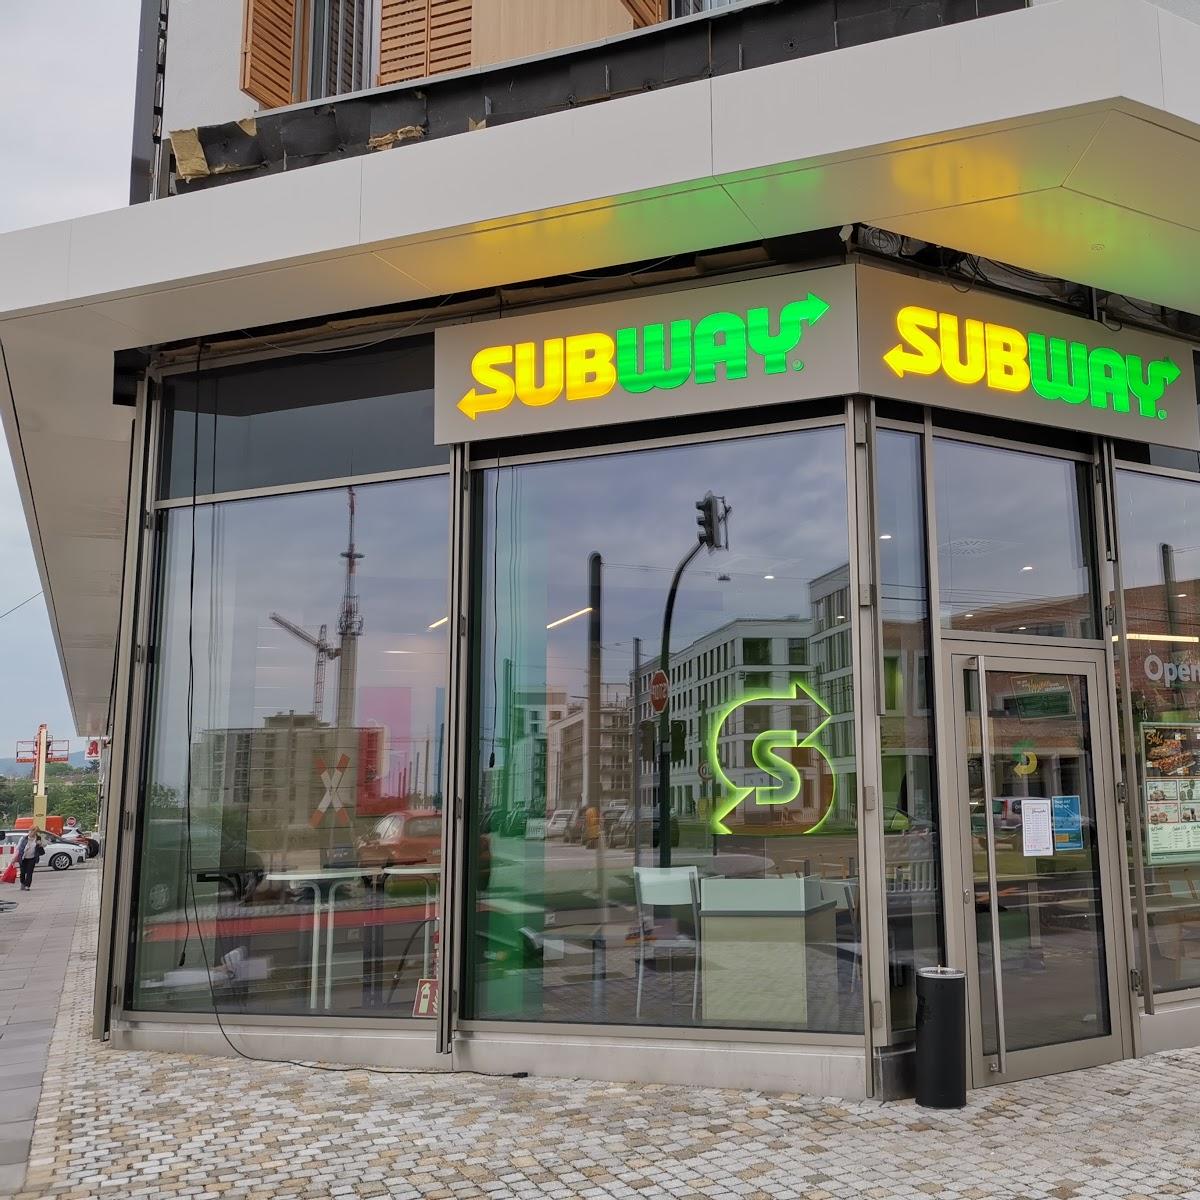 Restaurant "Subway" in Heidelberg